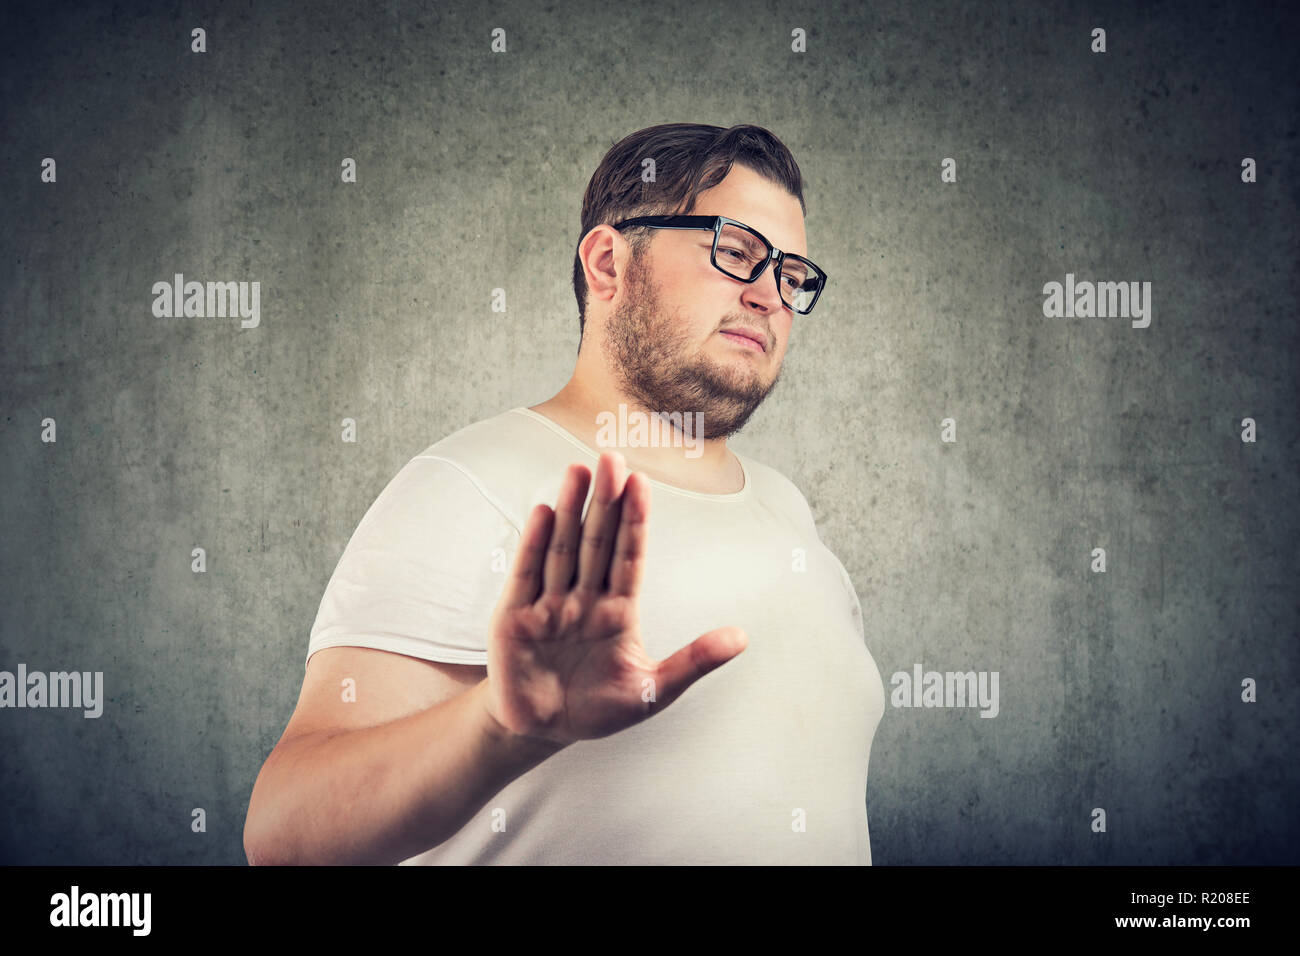 Annoyed sad man giving talk to hand gesture isolated on gray background. Negative emotion face expression feeling body language Stock Photo